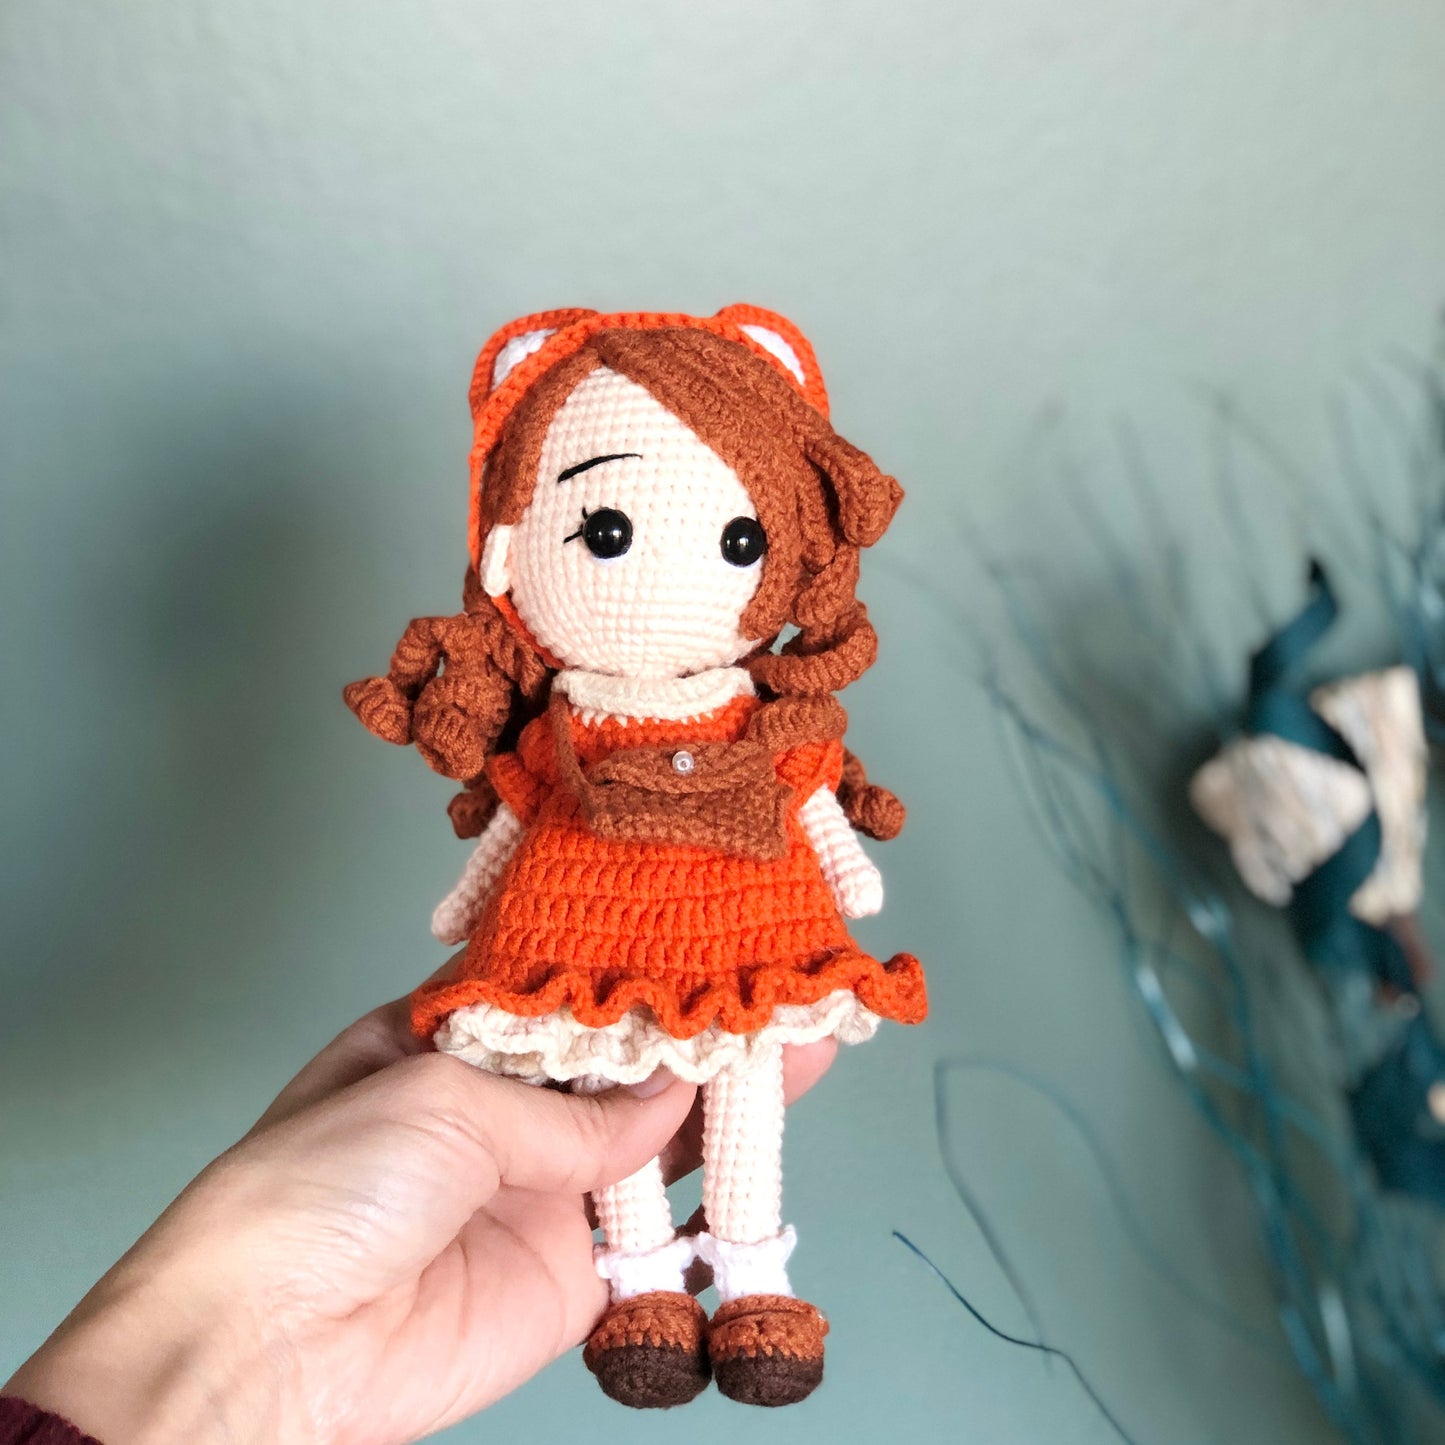 Ready To Ship, Handmade yarn cotton doll crochet, amigurumi, cute, soft toy for baby, toddler, kid, adult hobby